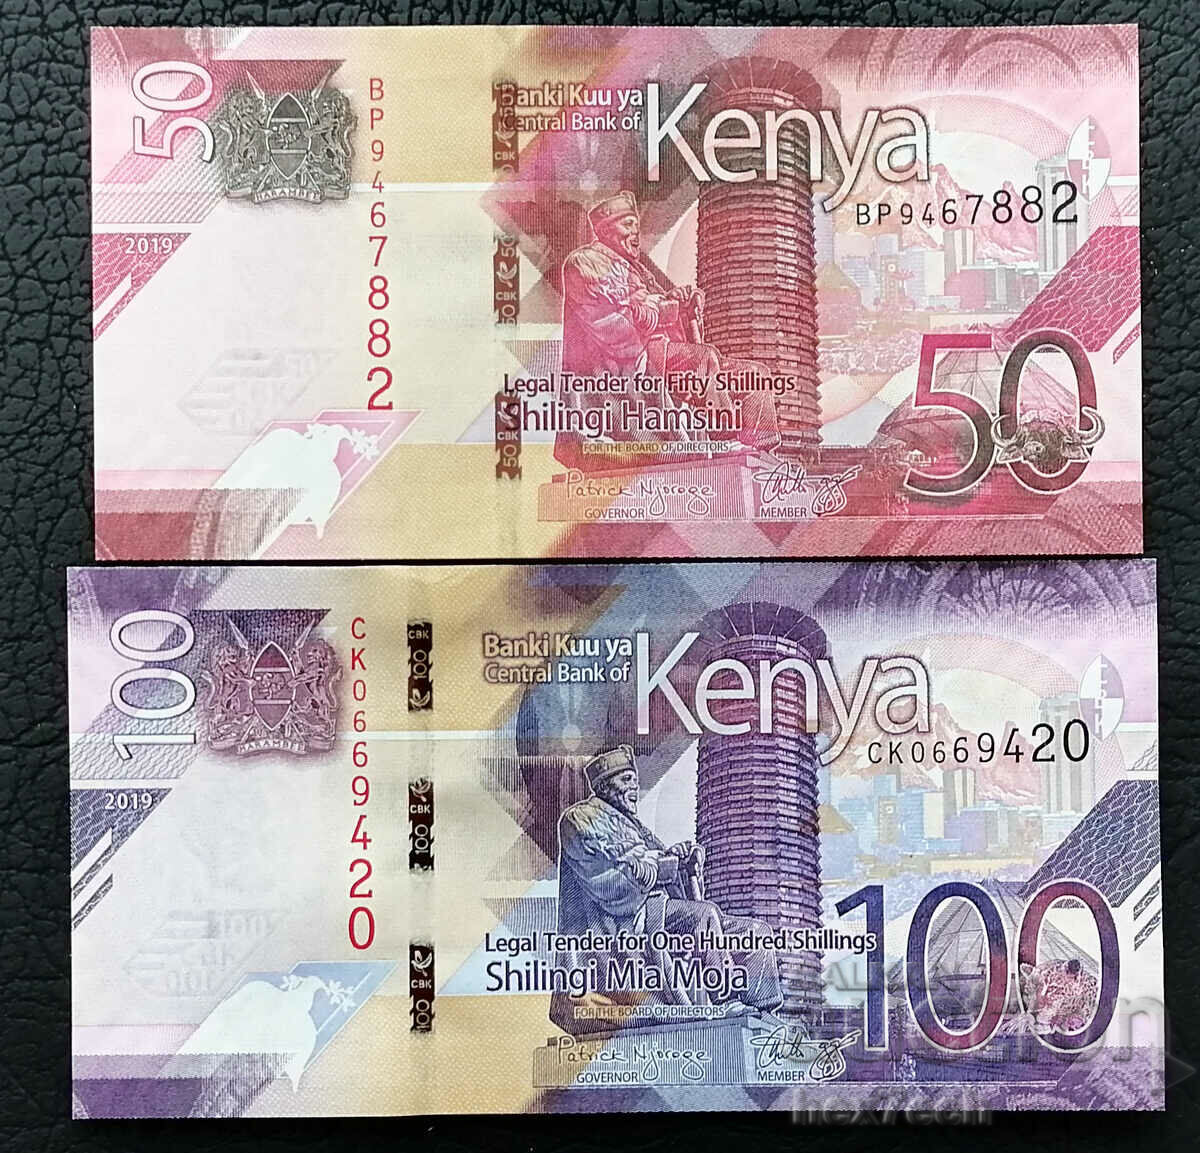 ❤️ ⭐ Lot Banknotes Kenya 50 and 100 Shillings UNC New ⭐ ❤️